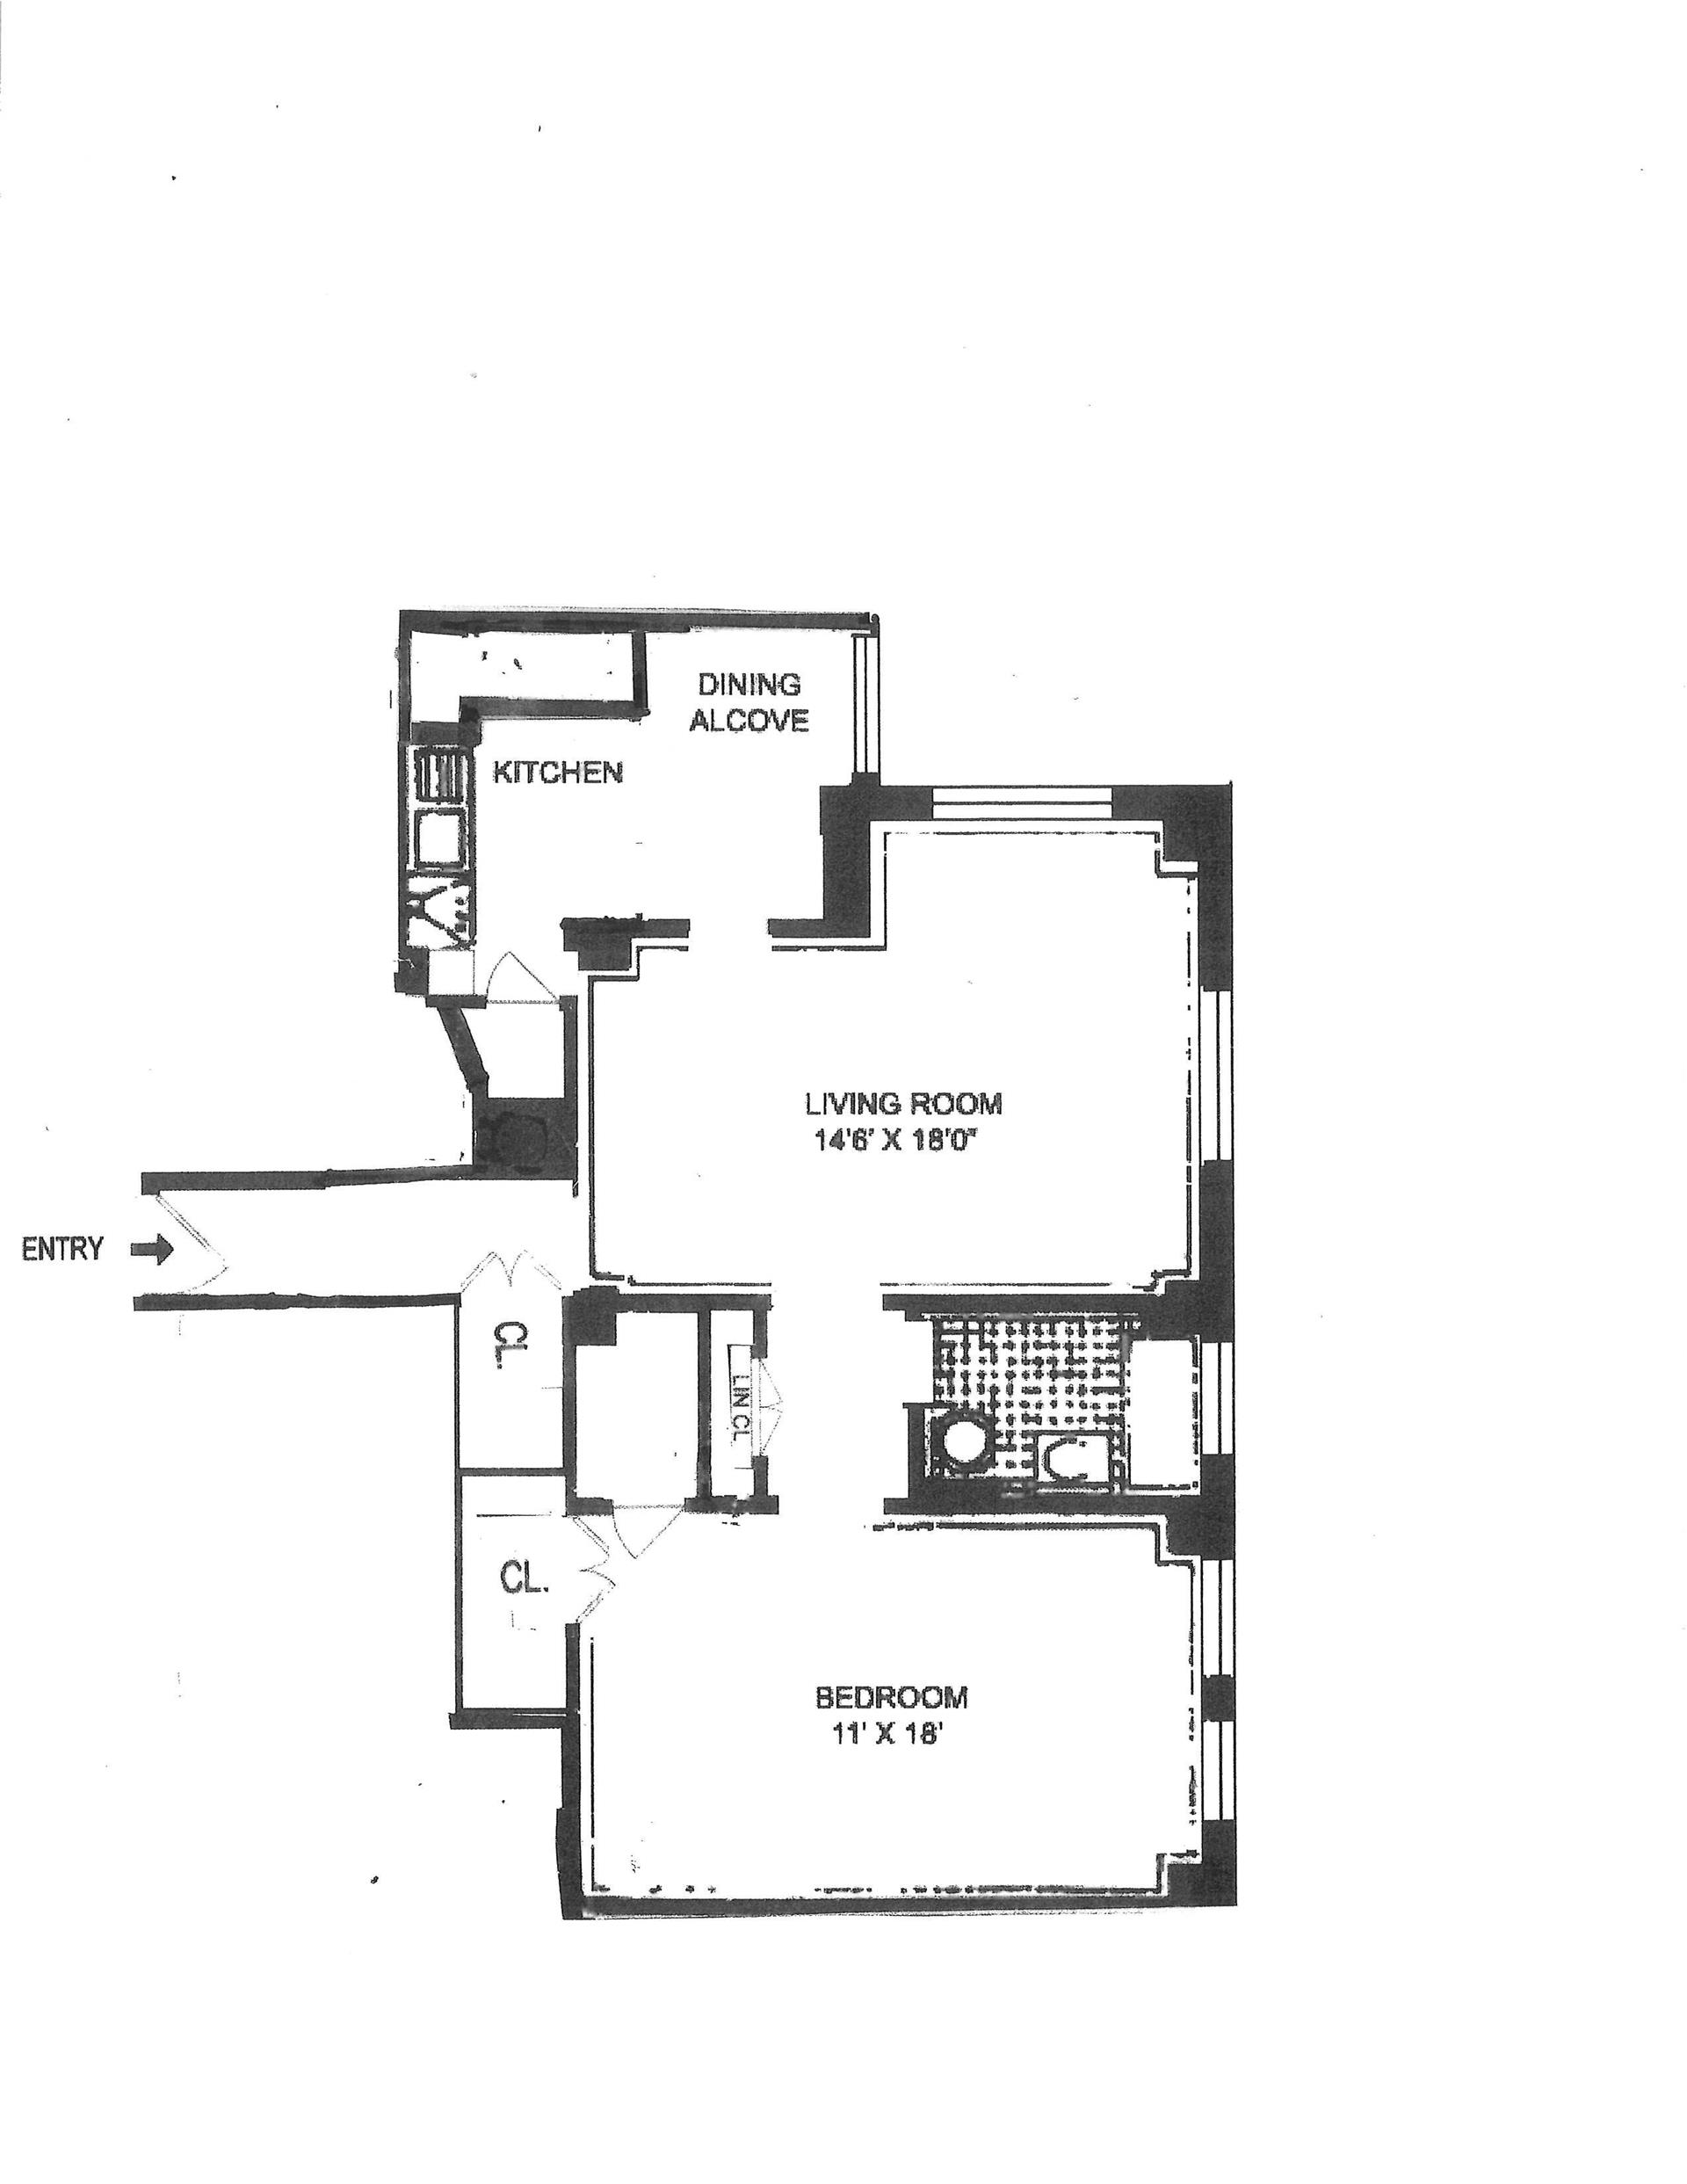 Floorplan for 215 West 75th Street, 5B